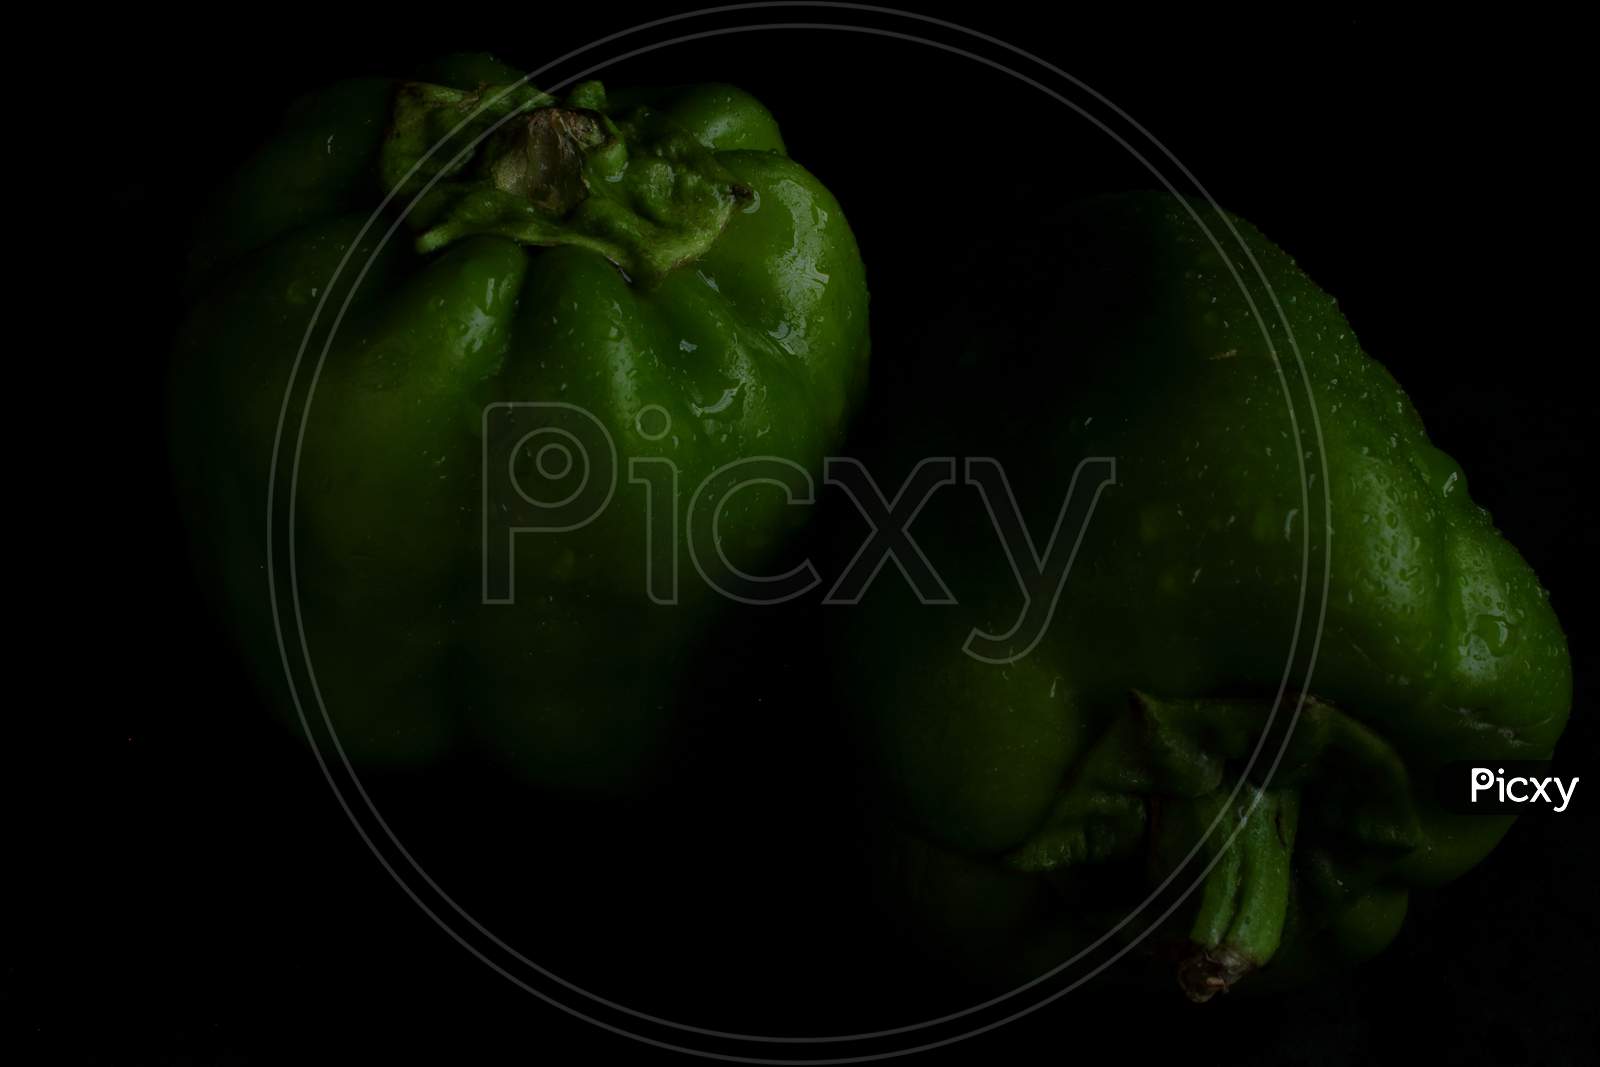 Green bell pepper on black backgound